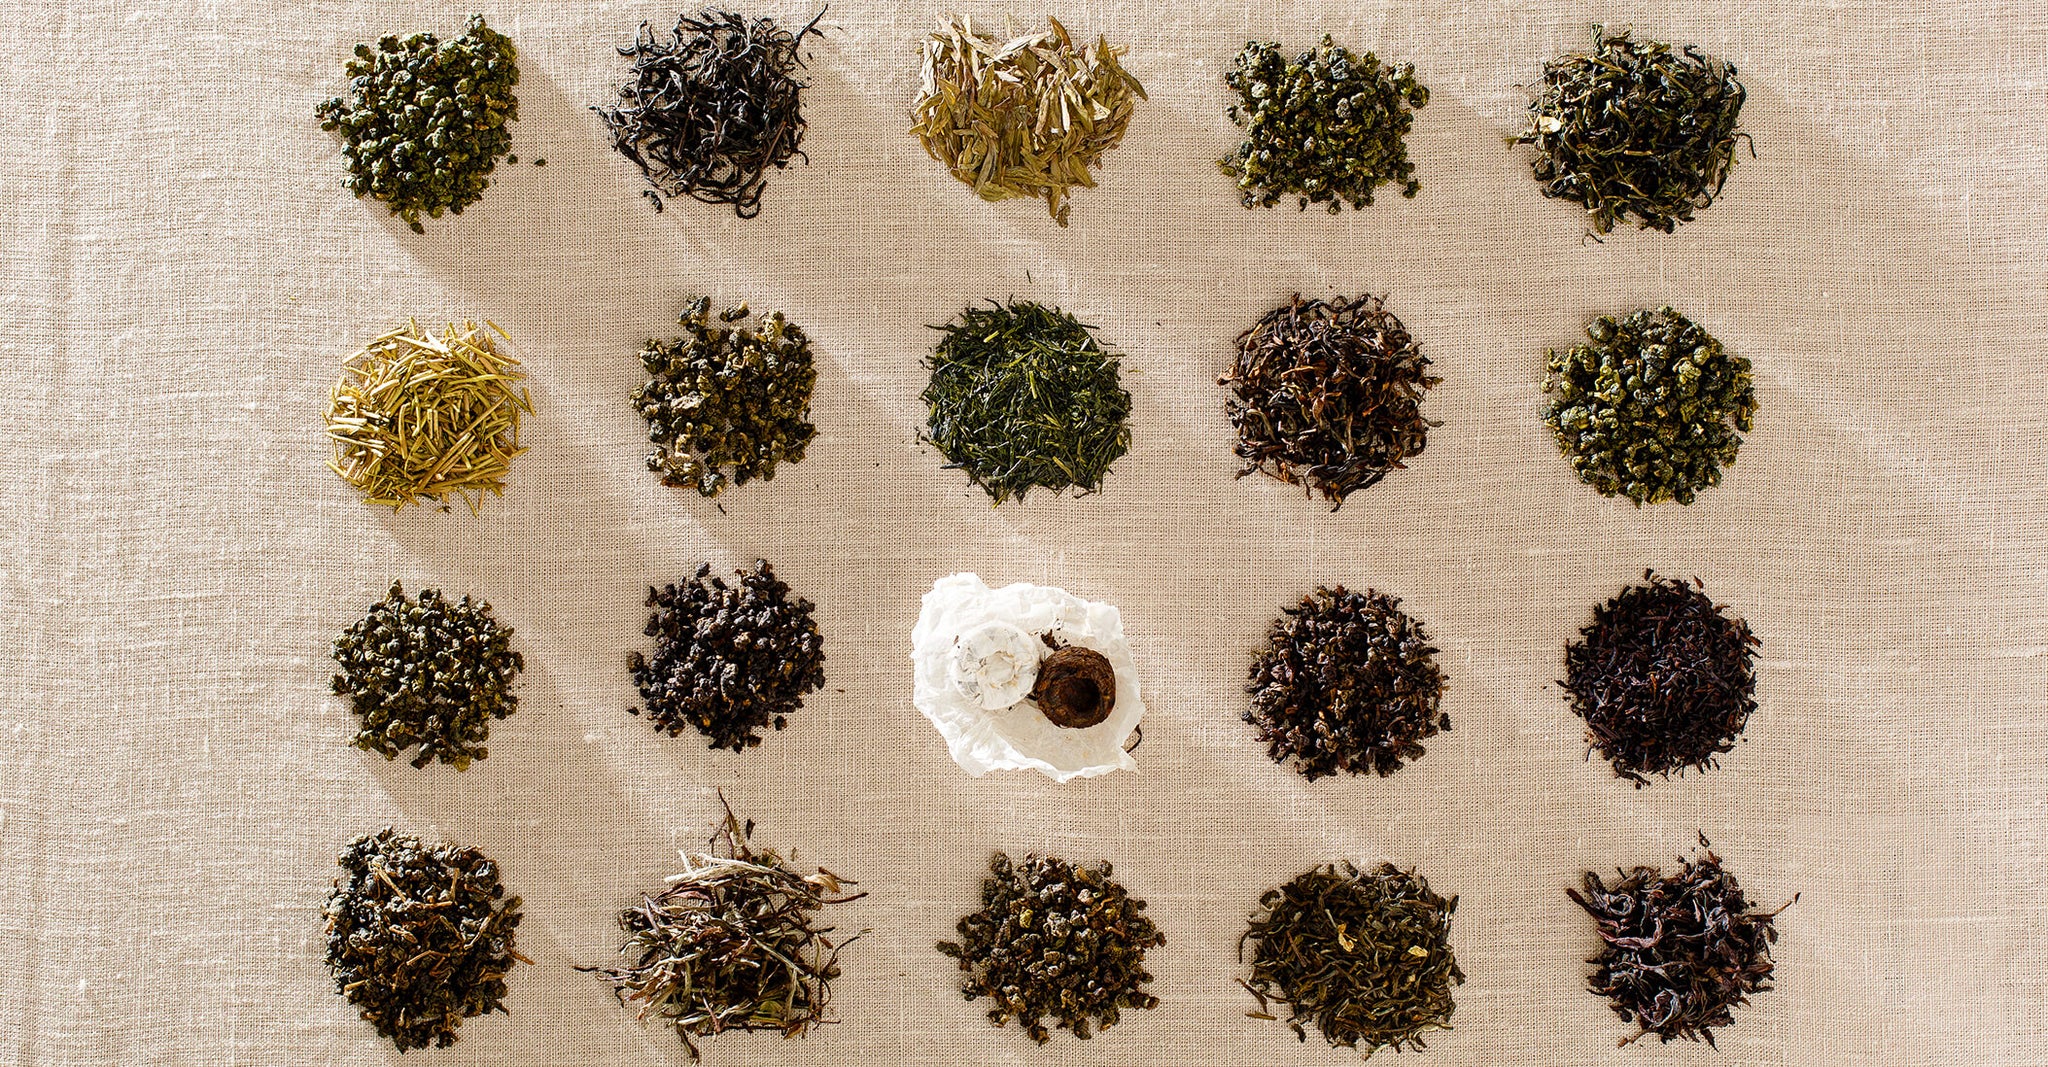 Taiwan Tea: Let's Get to Know the Six Major Taiwan Tea Varieties